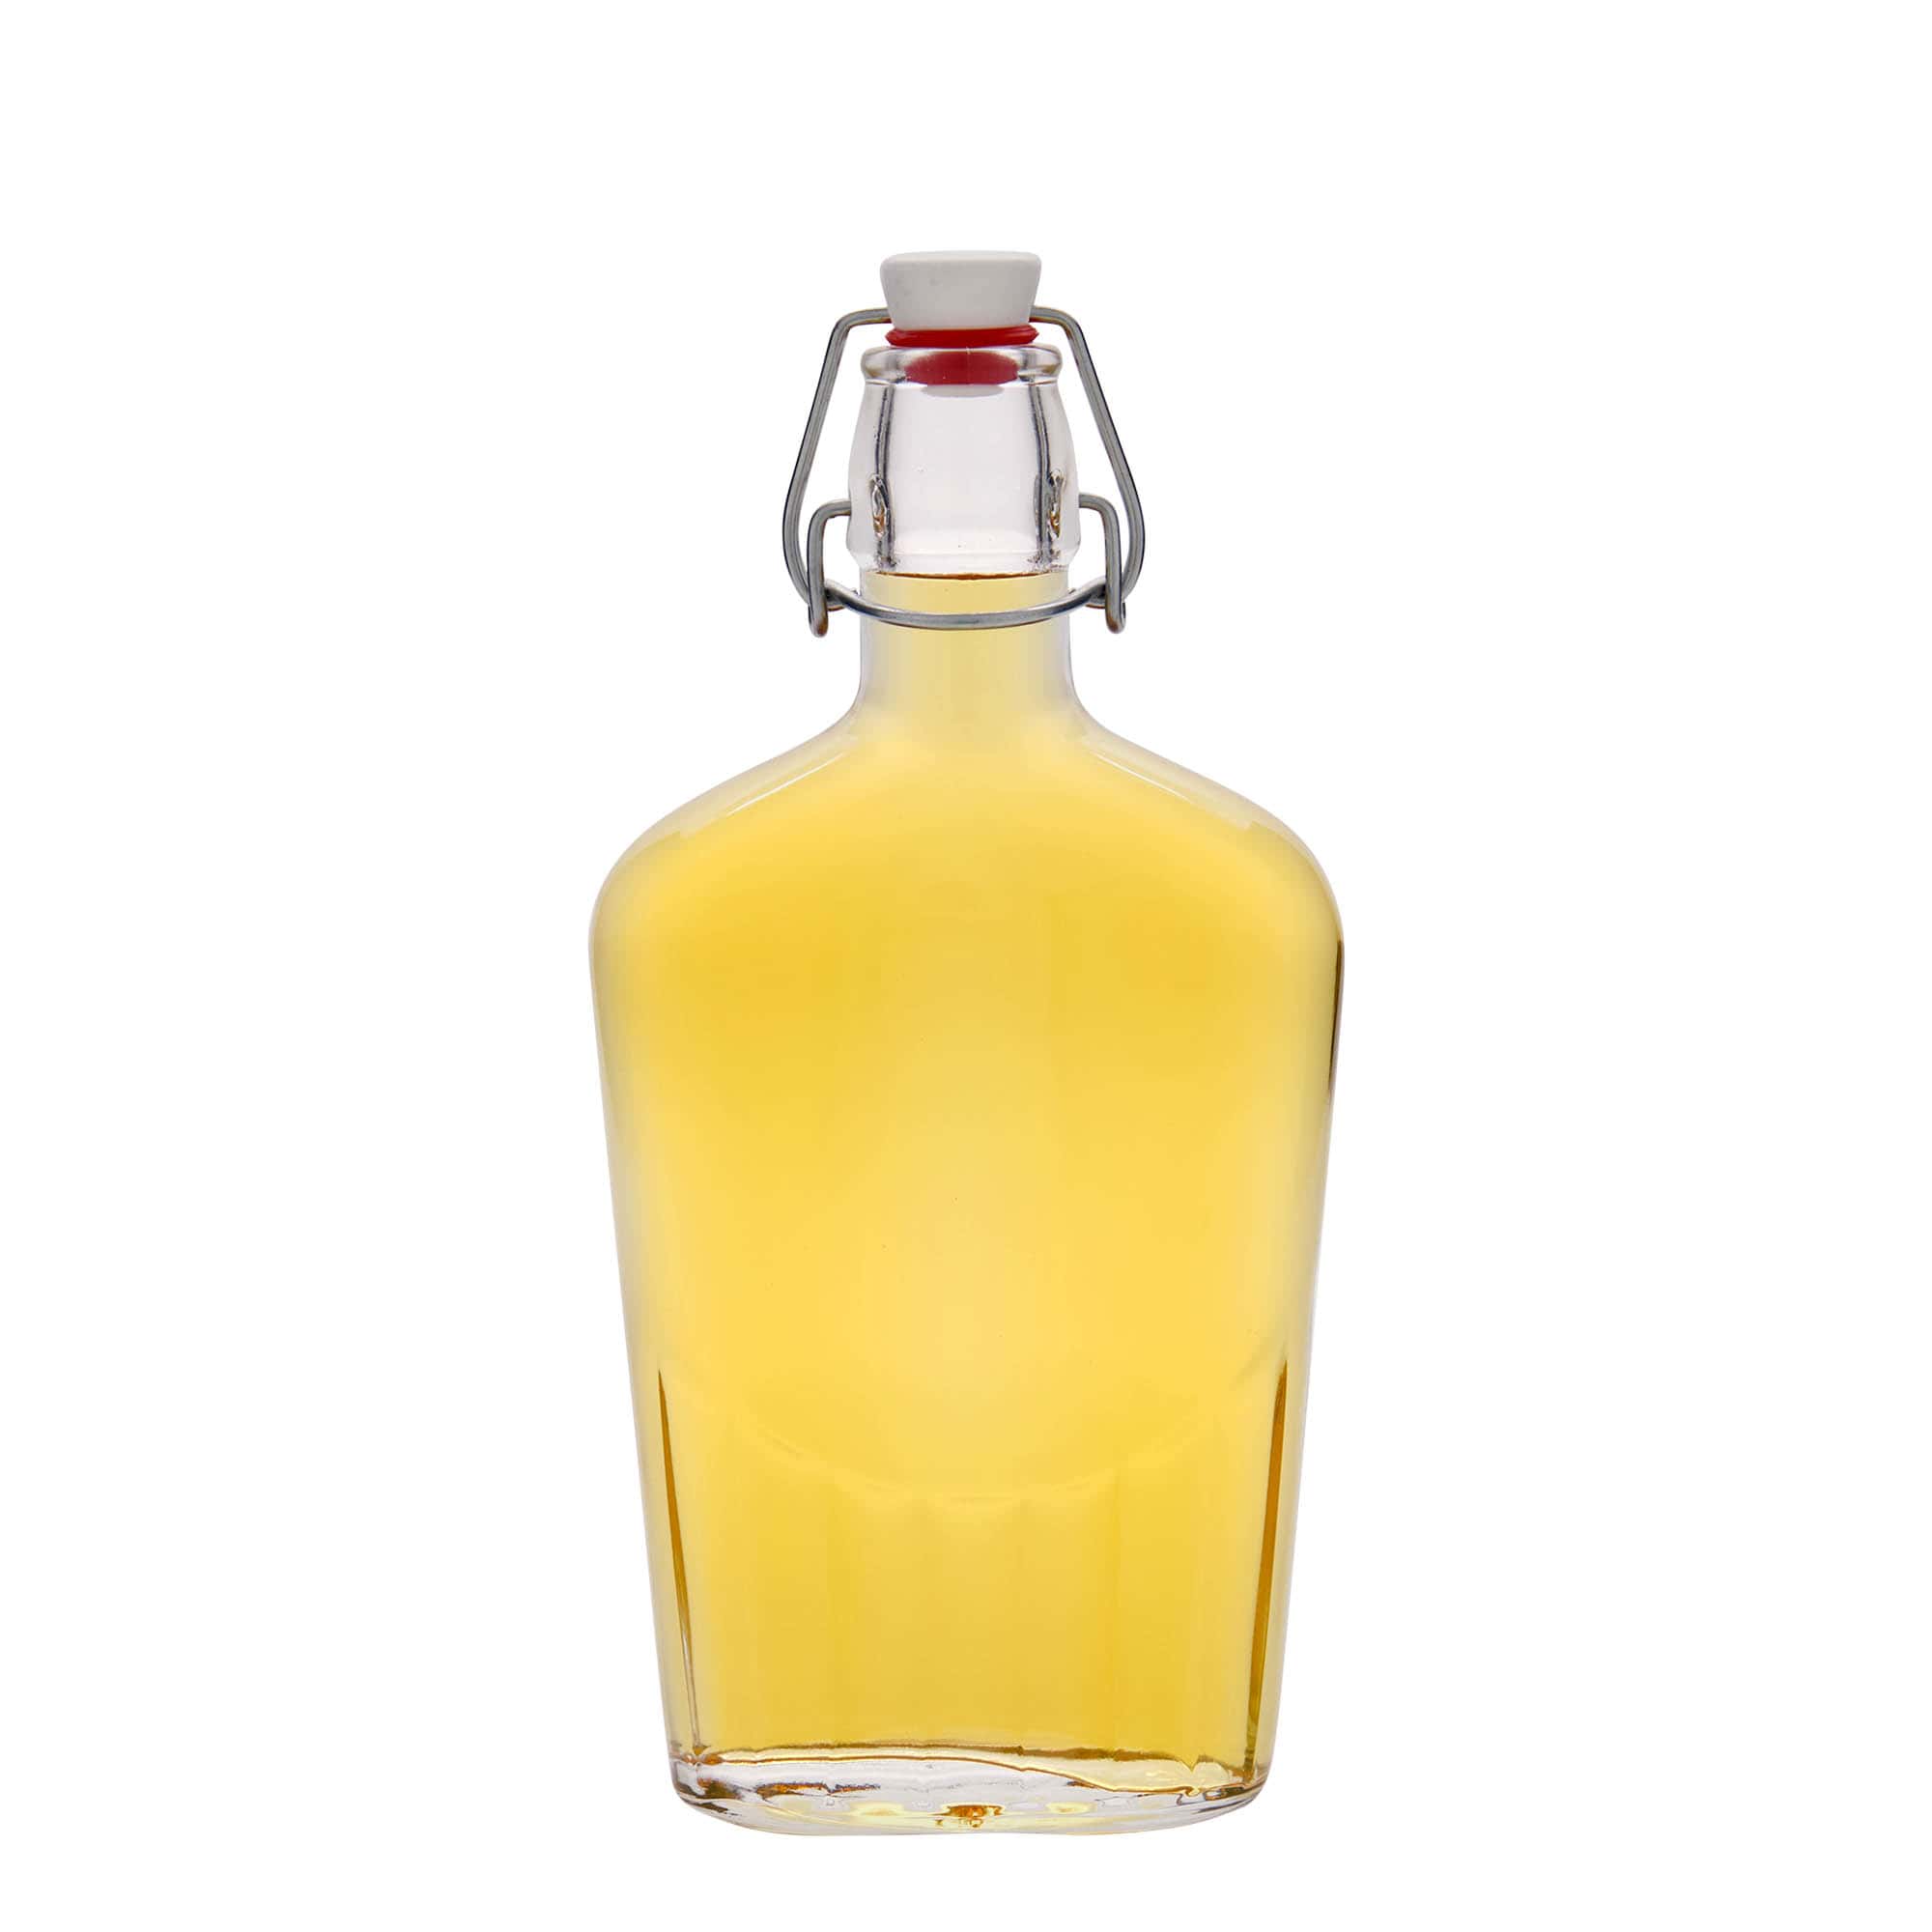 500 ml glasflaske 'Fiaschetta', oval, åbning: Patentlåg